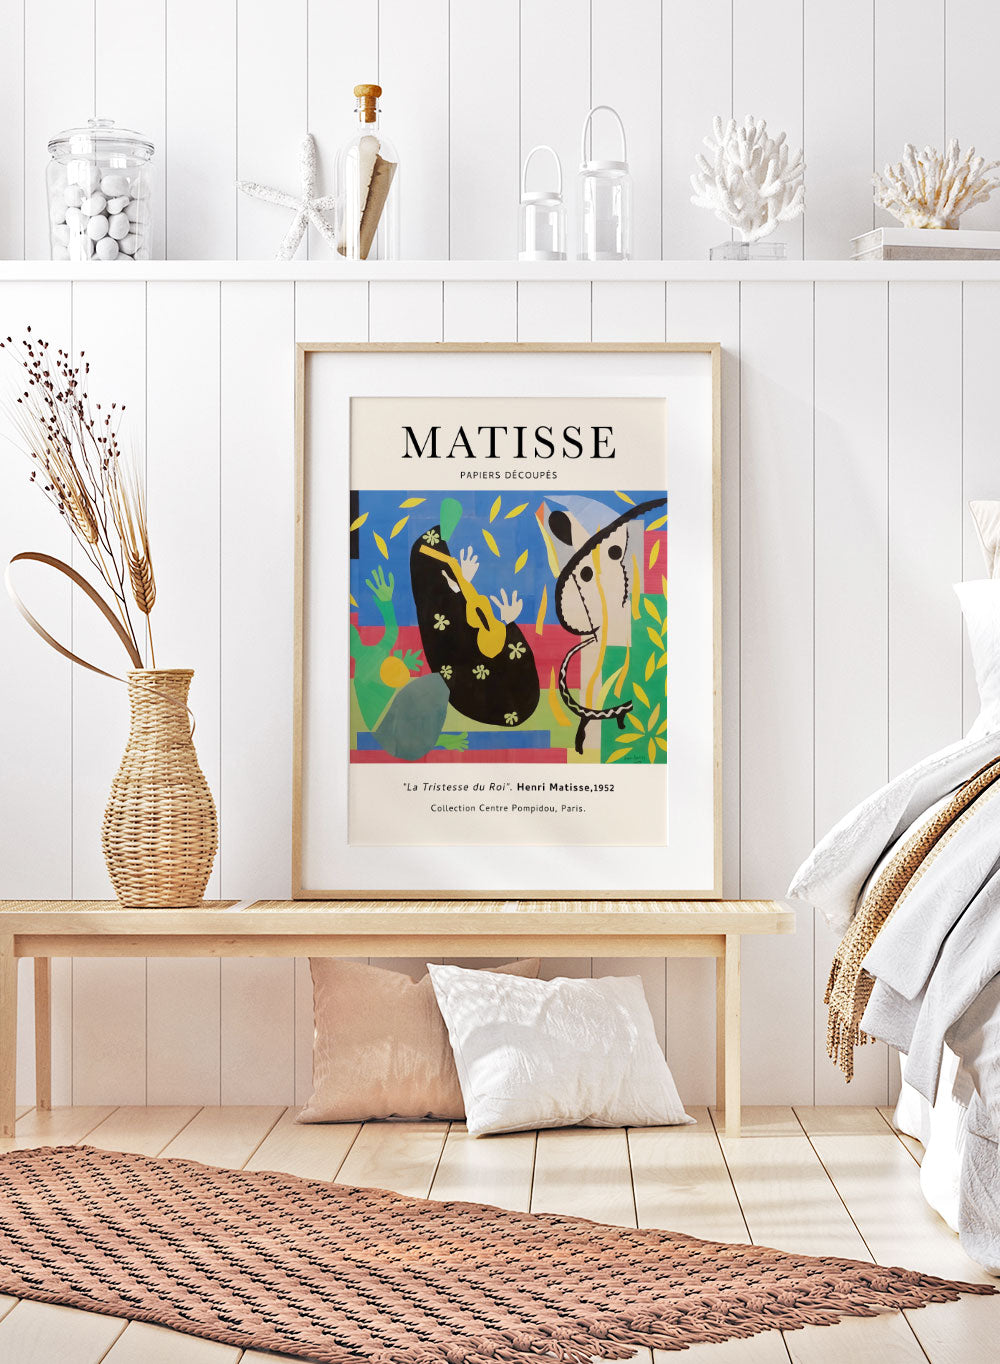 La Tristesse du Roi by Henri Matisse Print